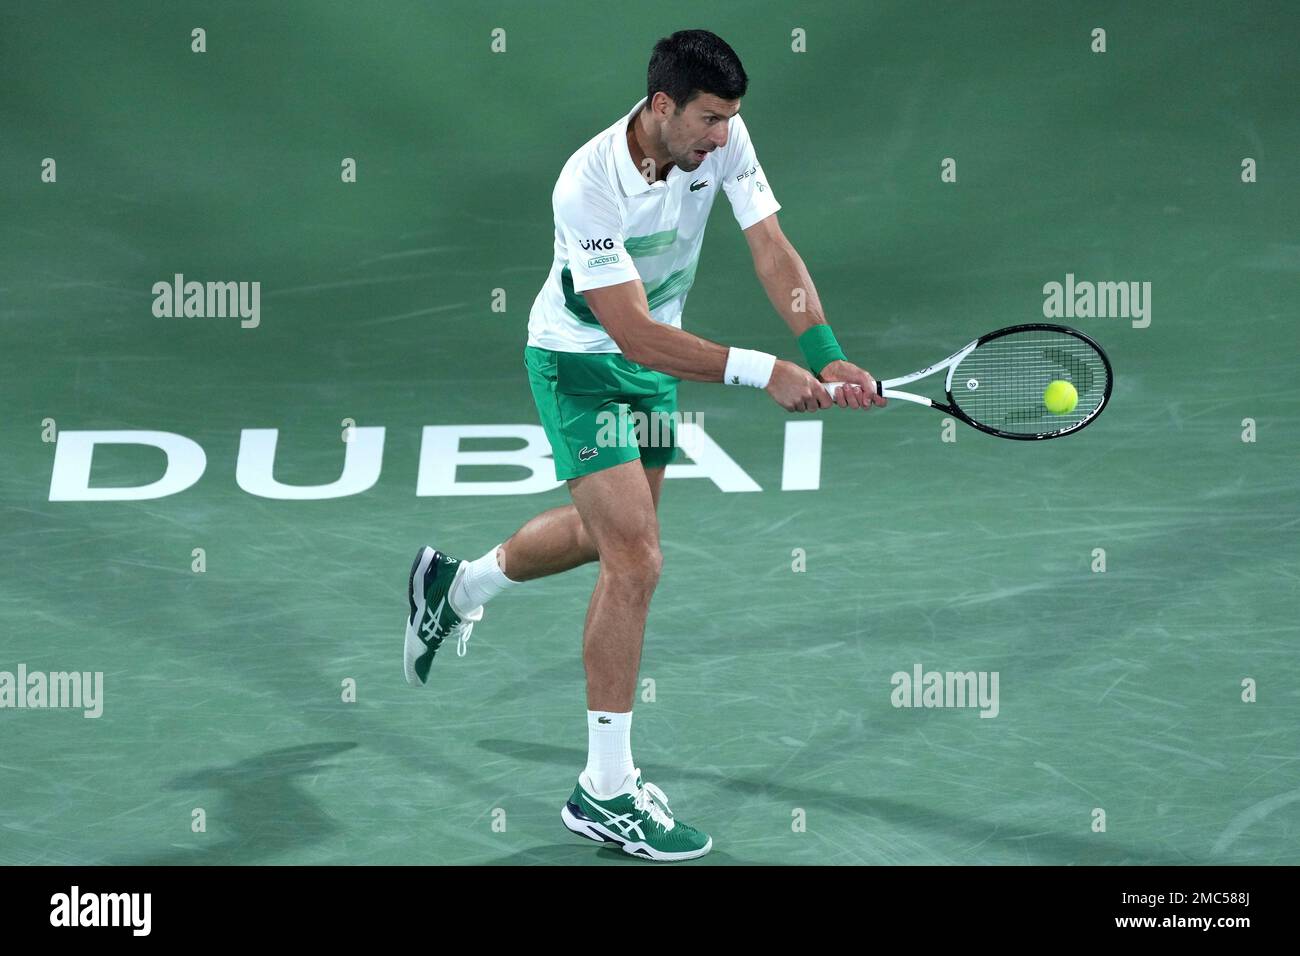 Serbias Novak Djokovic returns the ball to Italys Lorenzo Musetti during a match of the Dubai Duty Free Tennis Championship in Dubai, United Arab Emirates, Monday, Feb